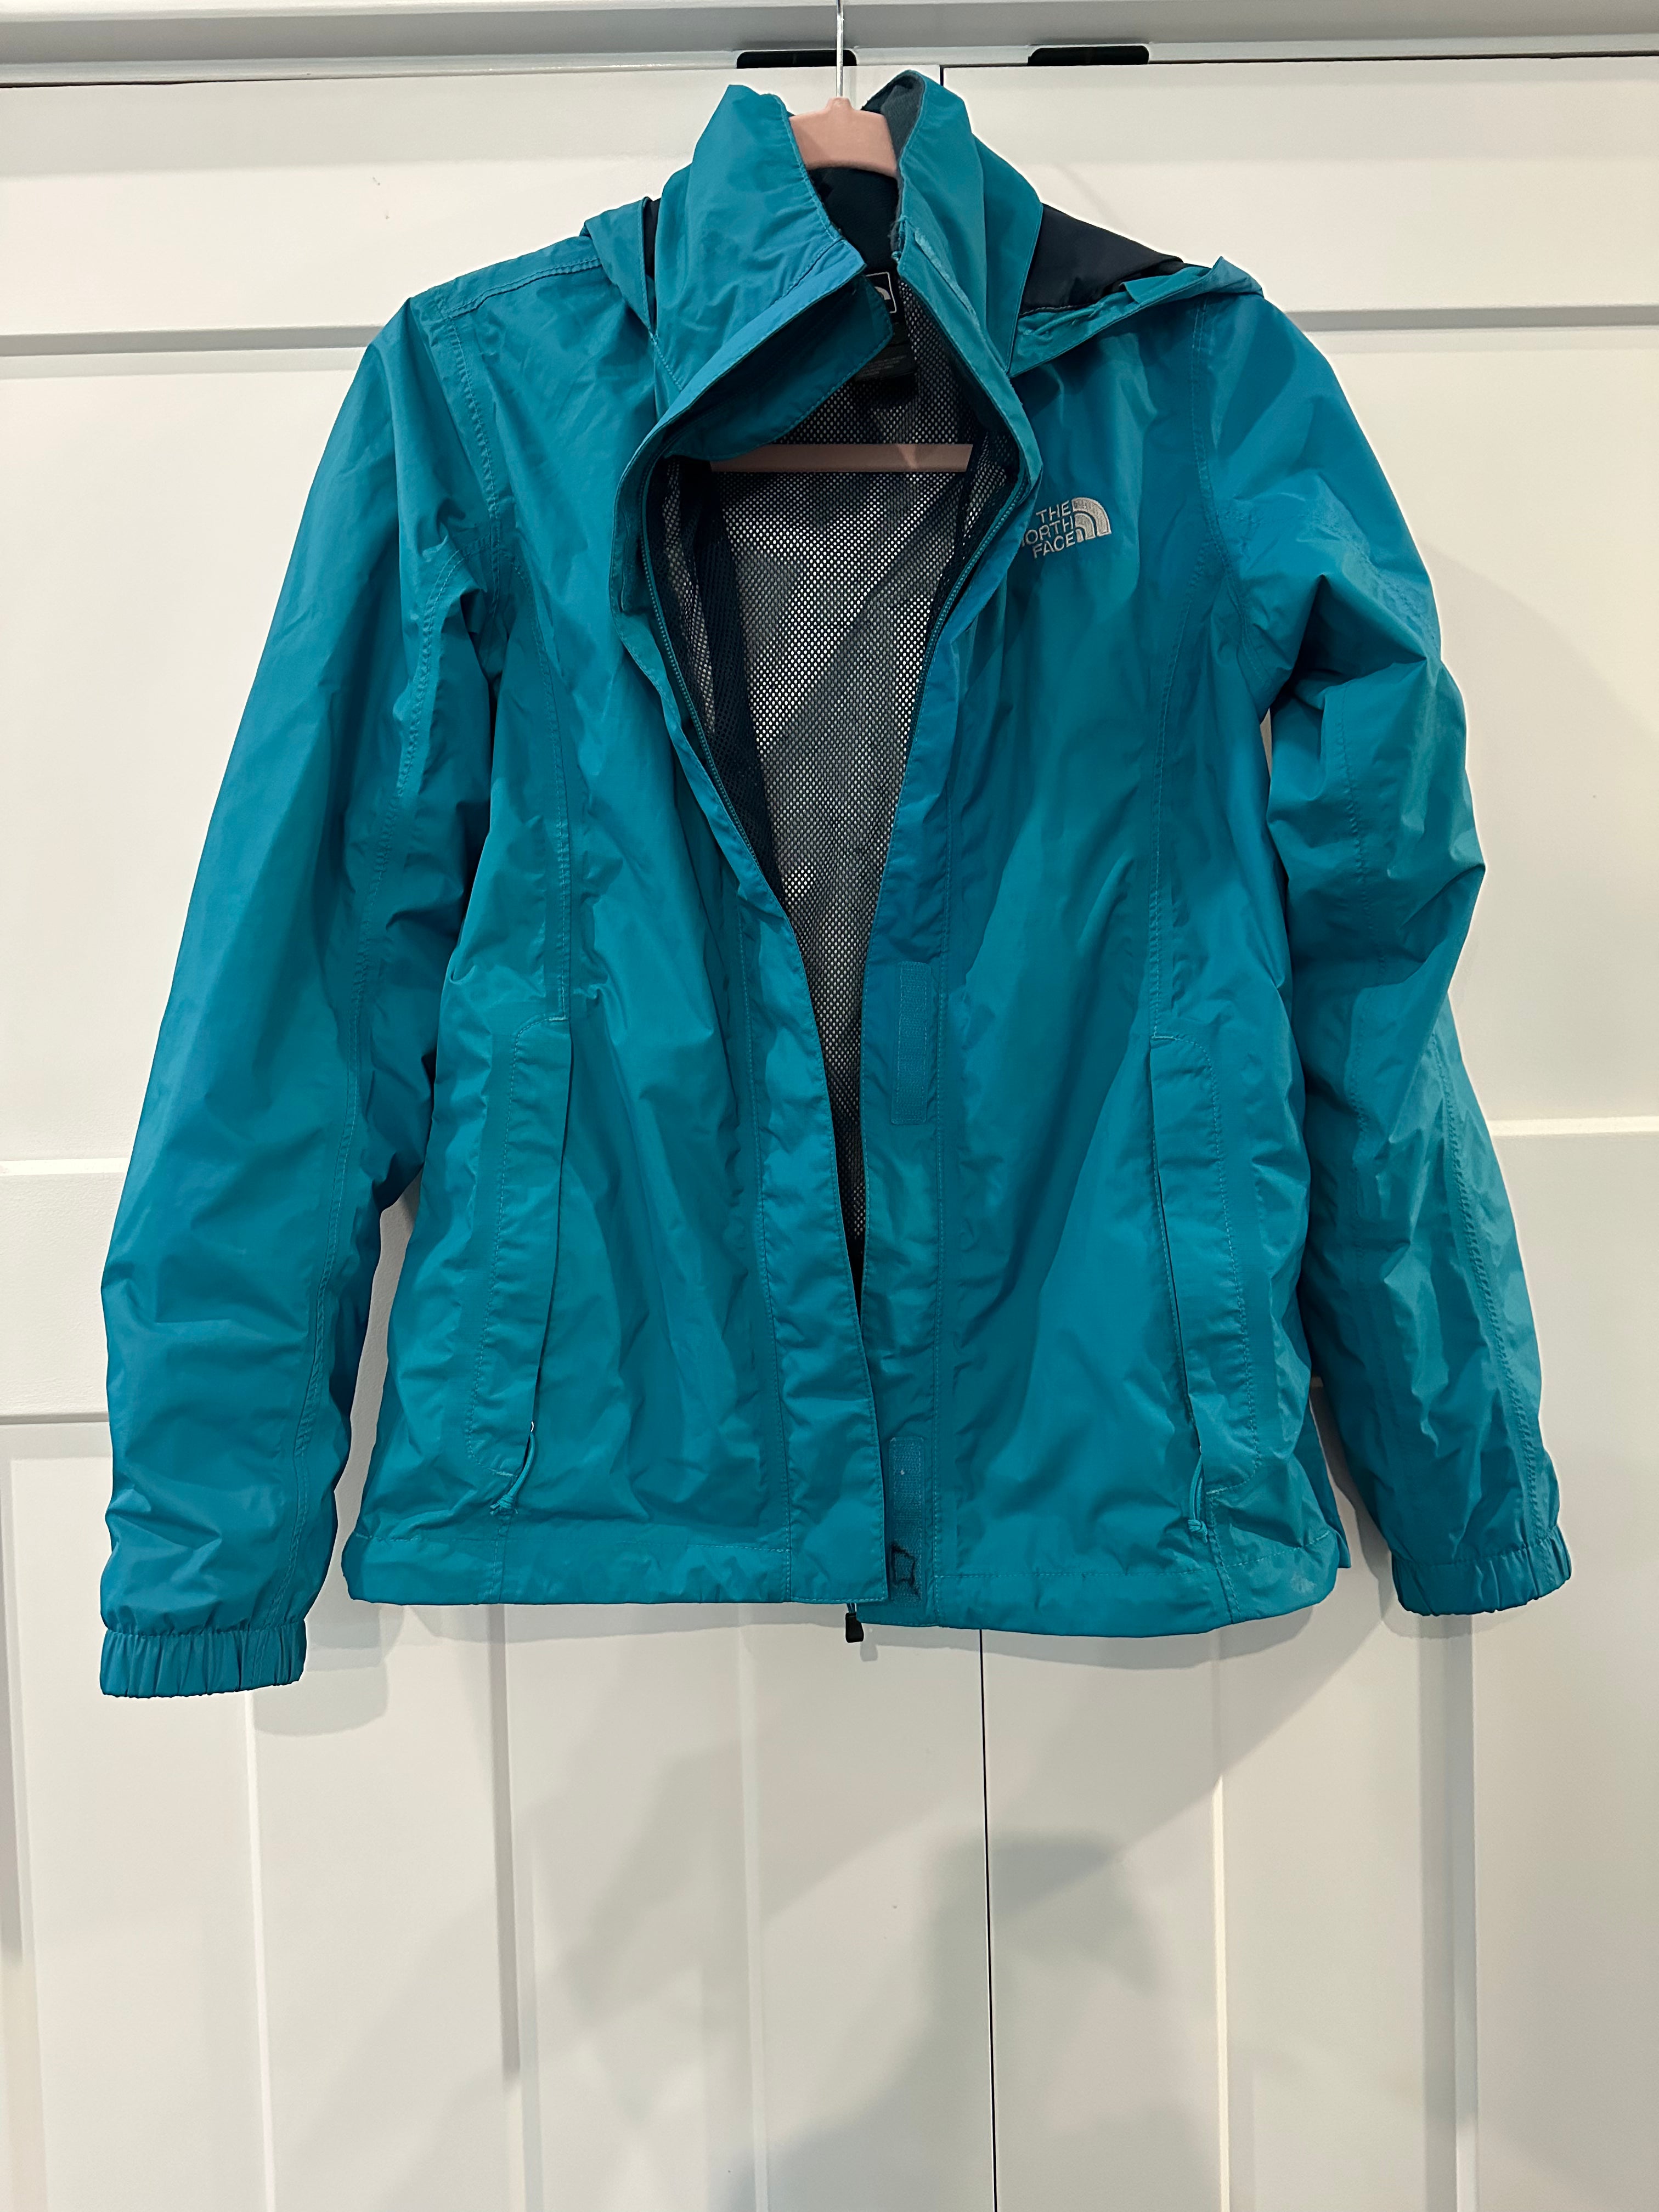 Turquoise Rain Coat | The North Face